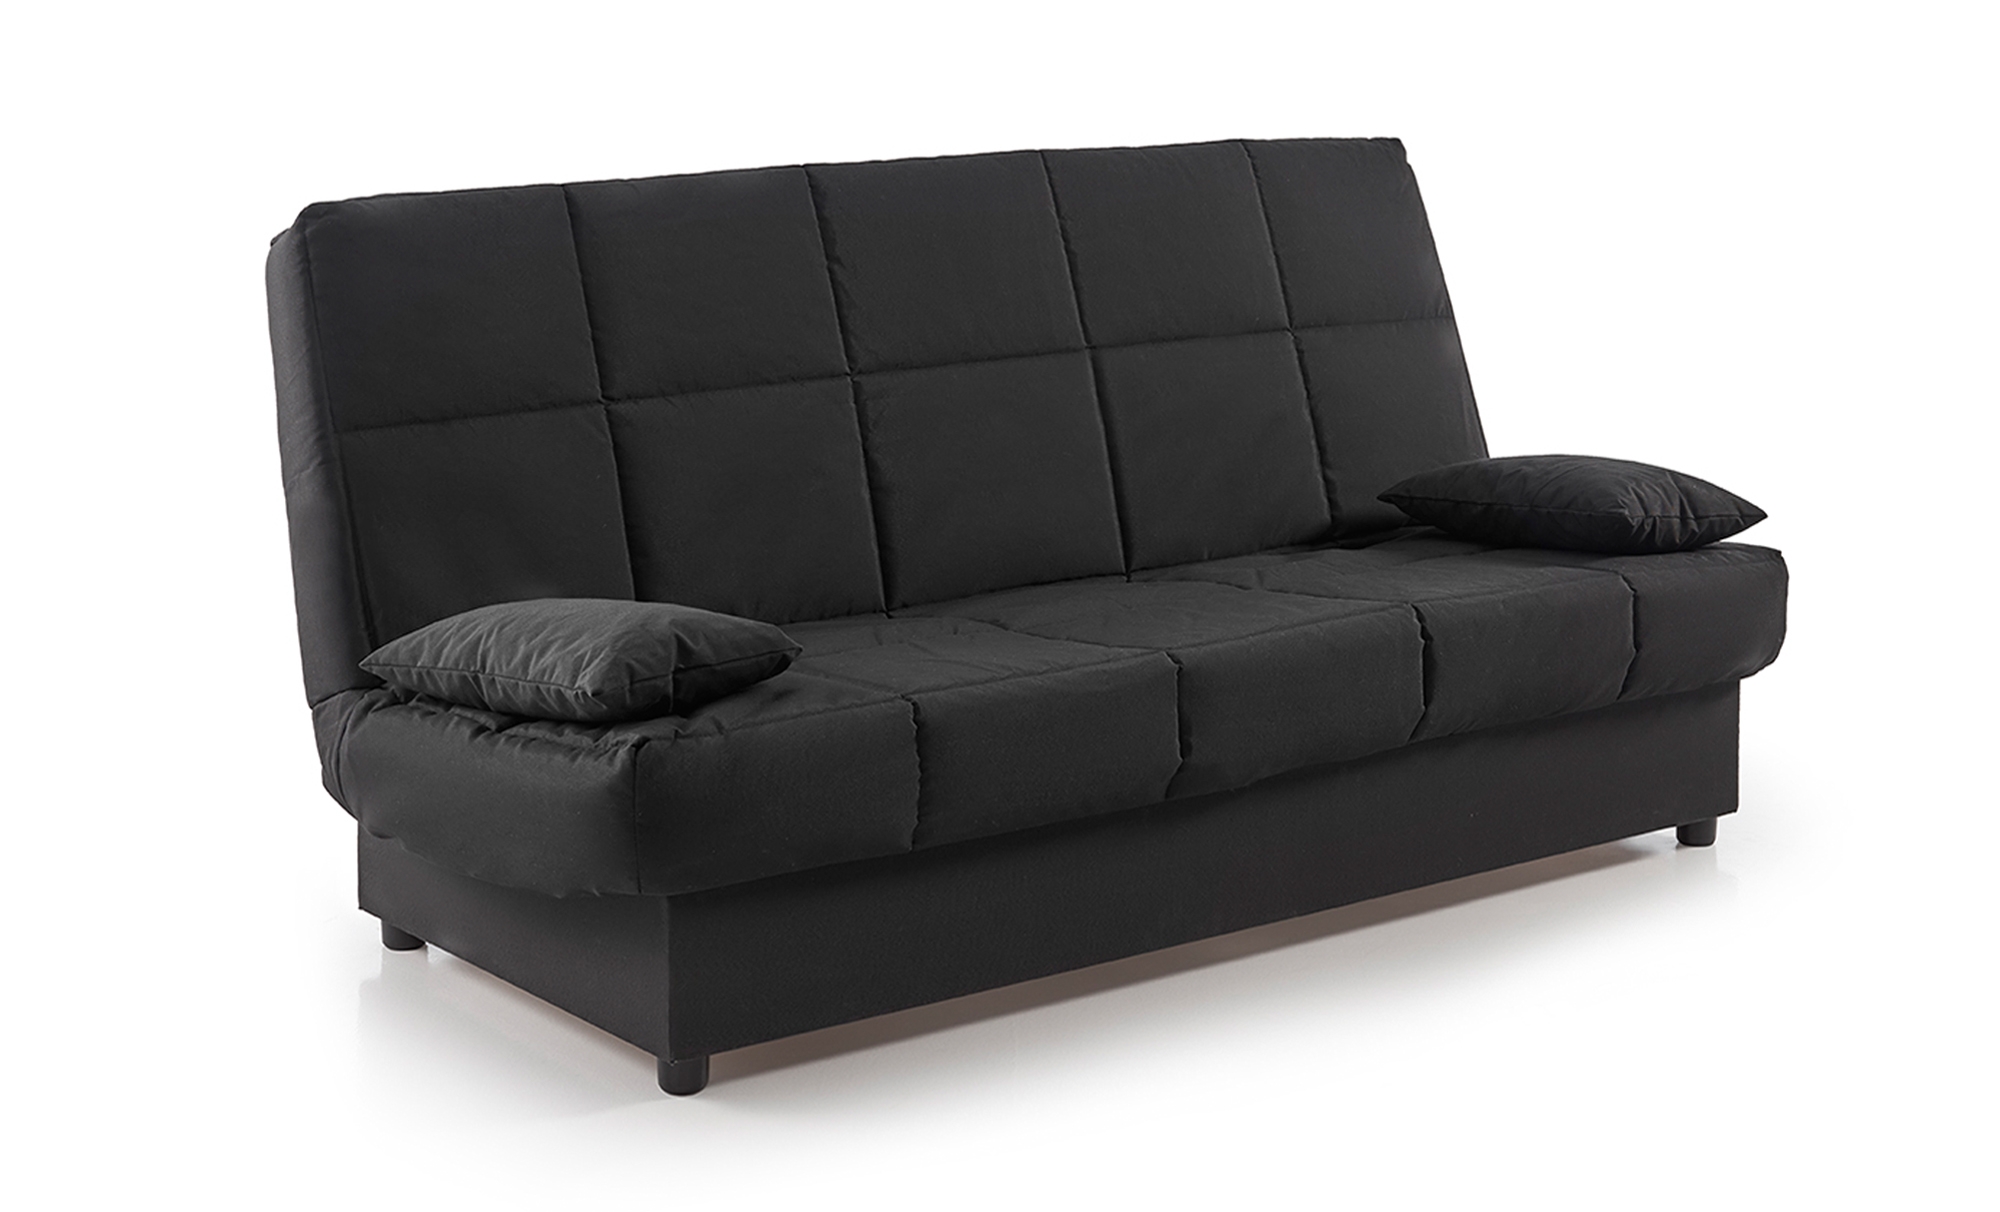 Sofa Cama Baratos